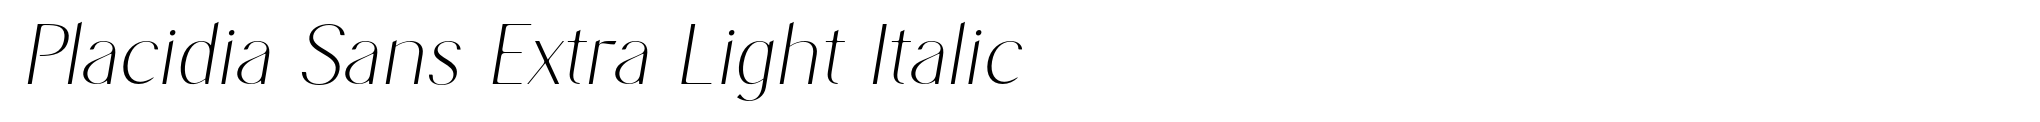 Placidia Sans Extra Light Italic image